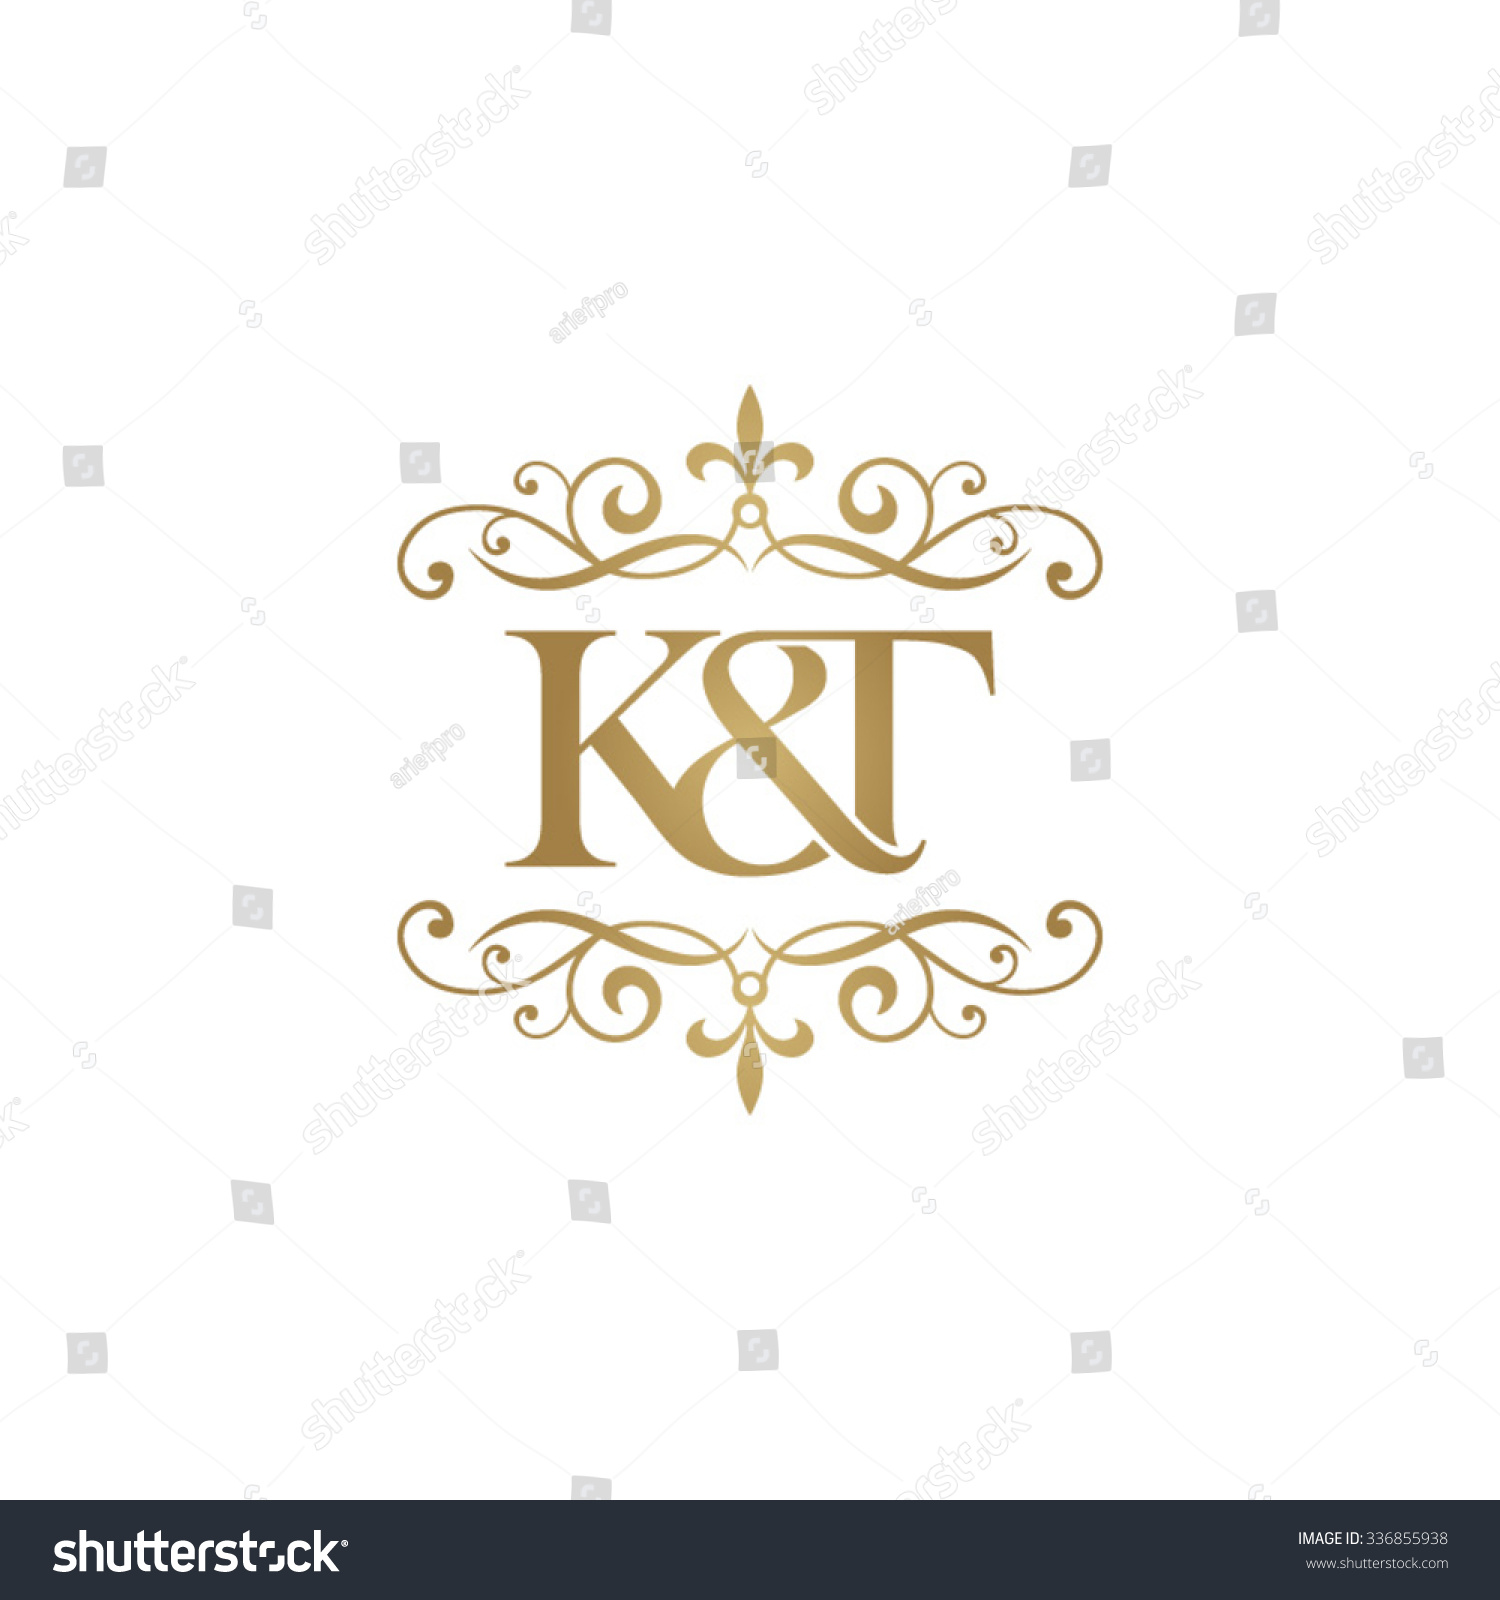 Kt Initial Logo Ornament Ampersand Monogram Stock Vector Royalty Free